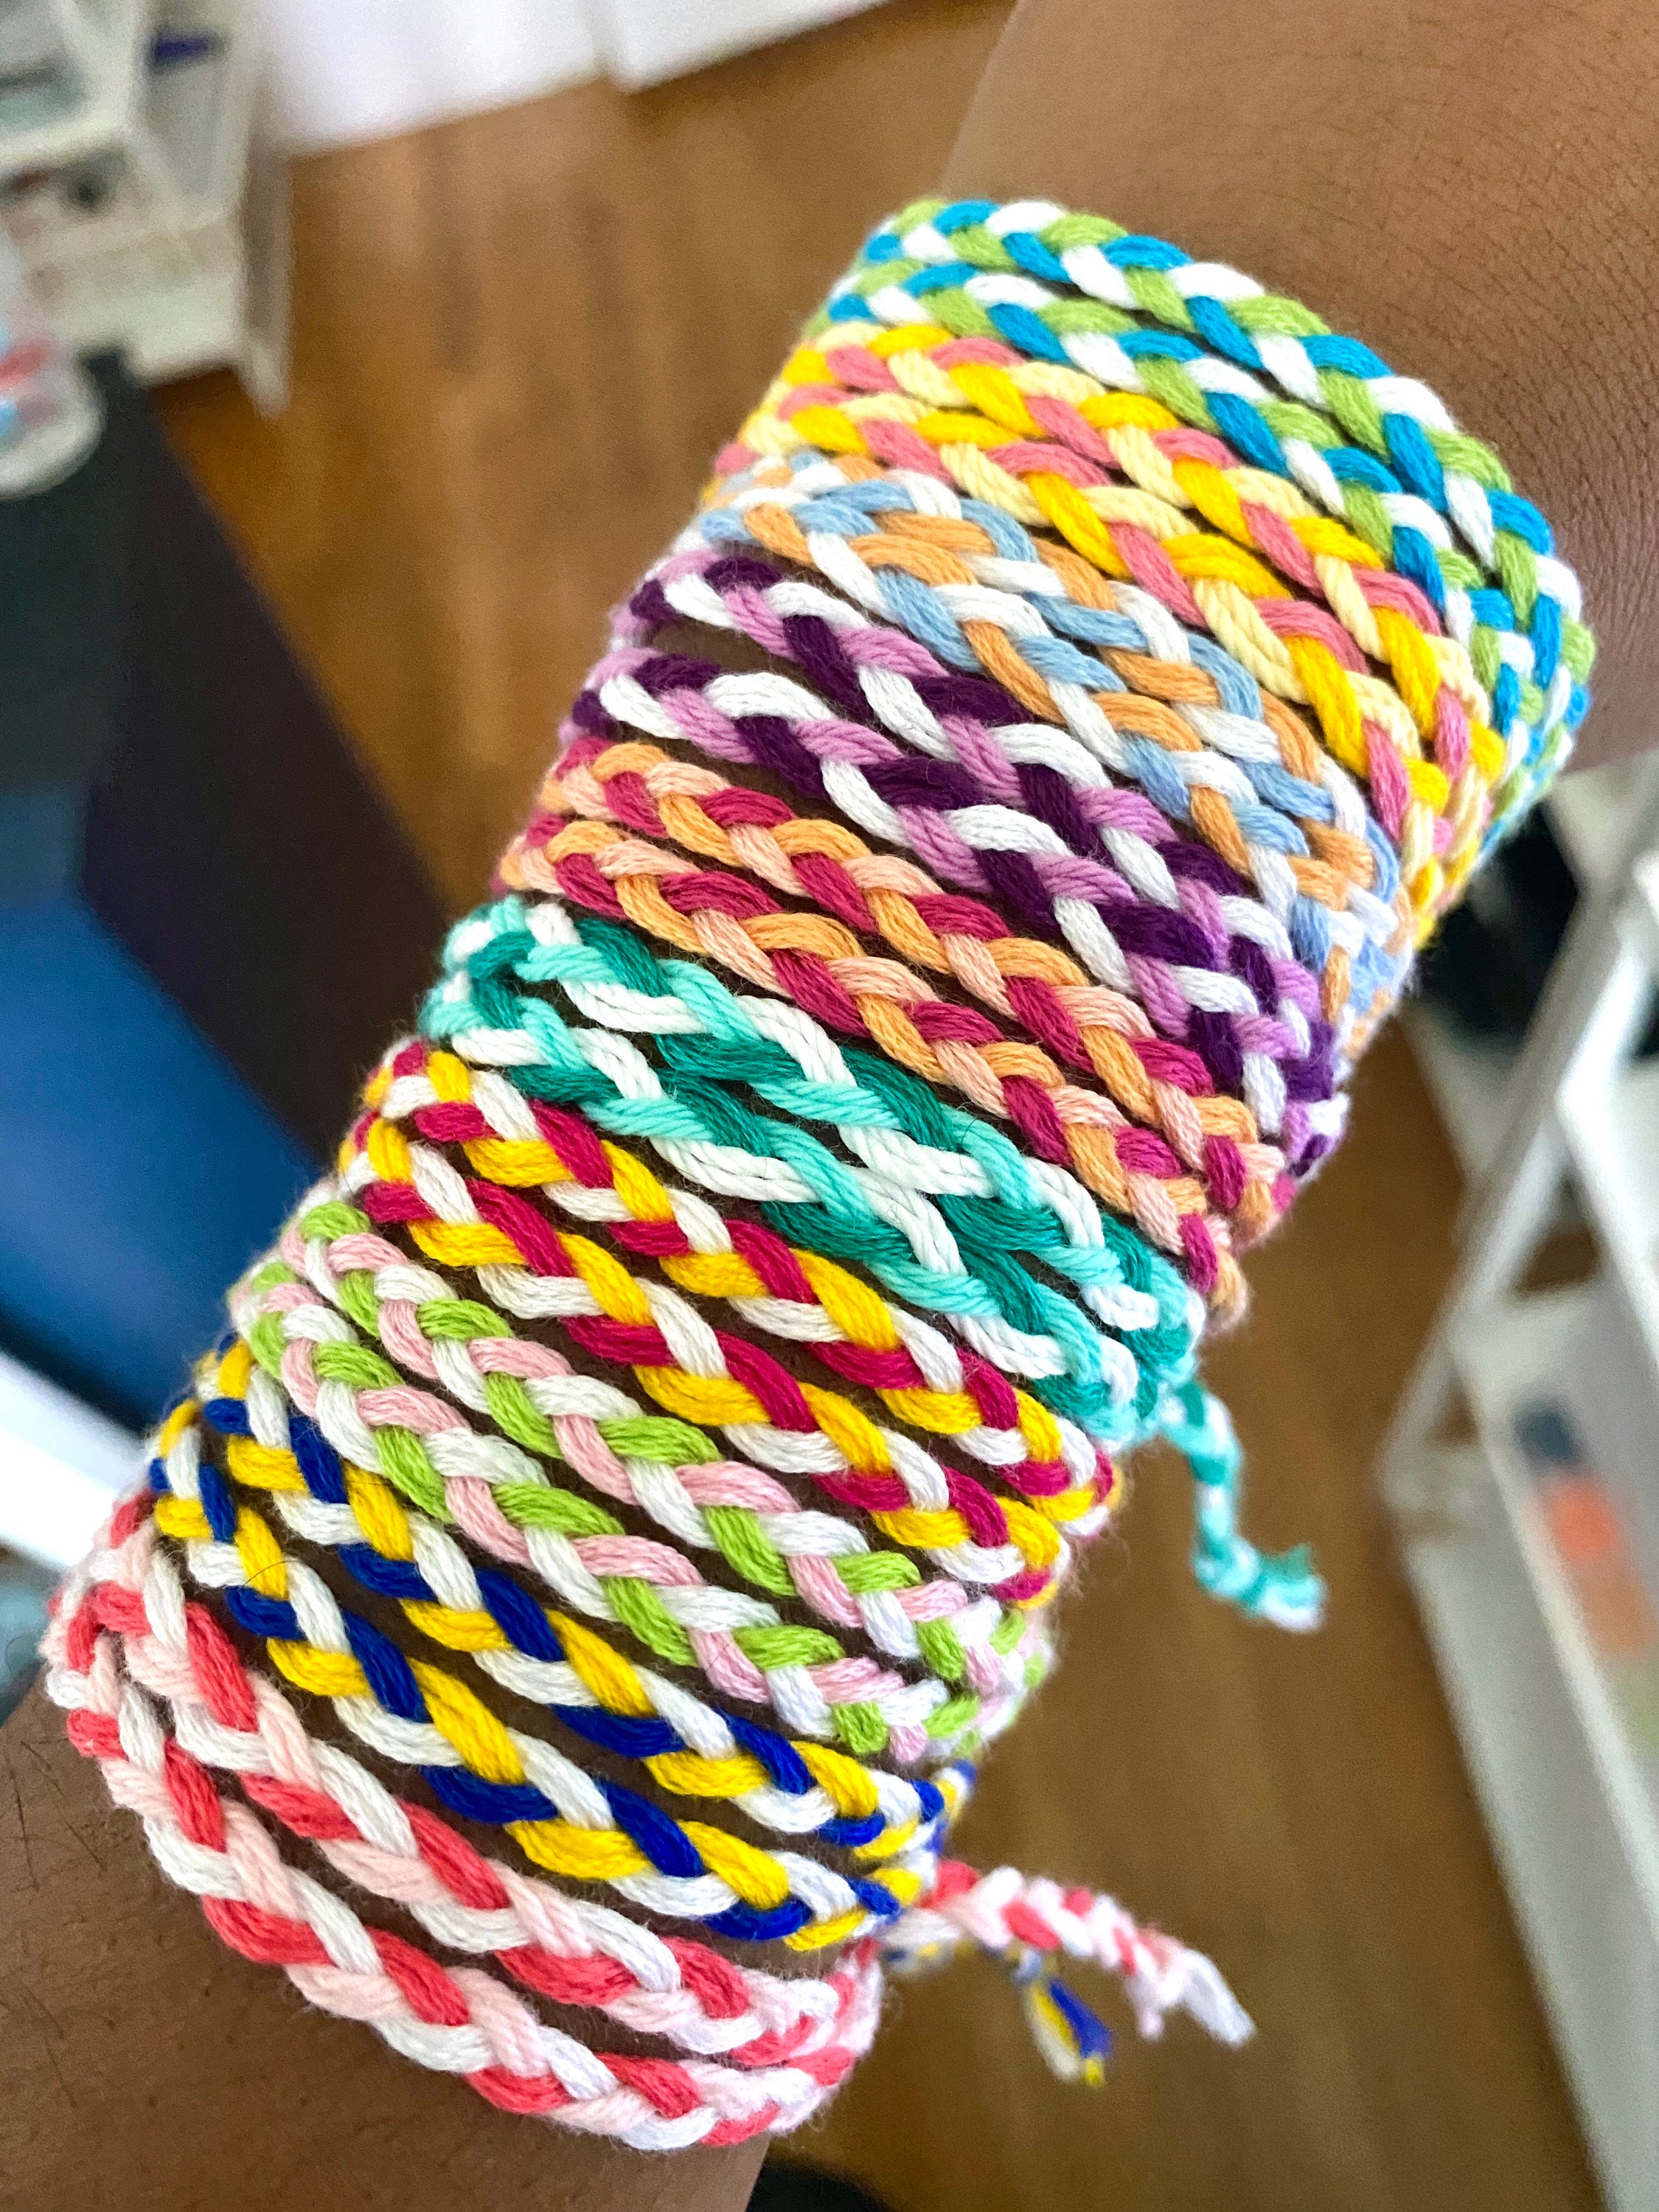 Custom Candy Stripe Friendship Bracelets, Colourful Woven String